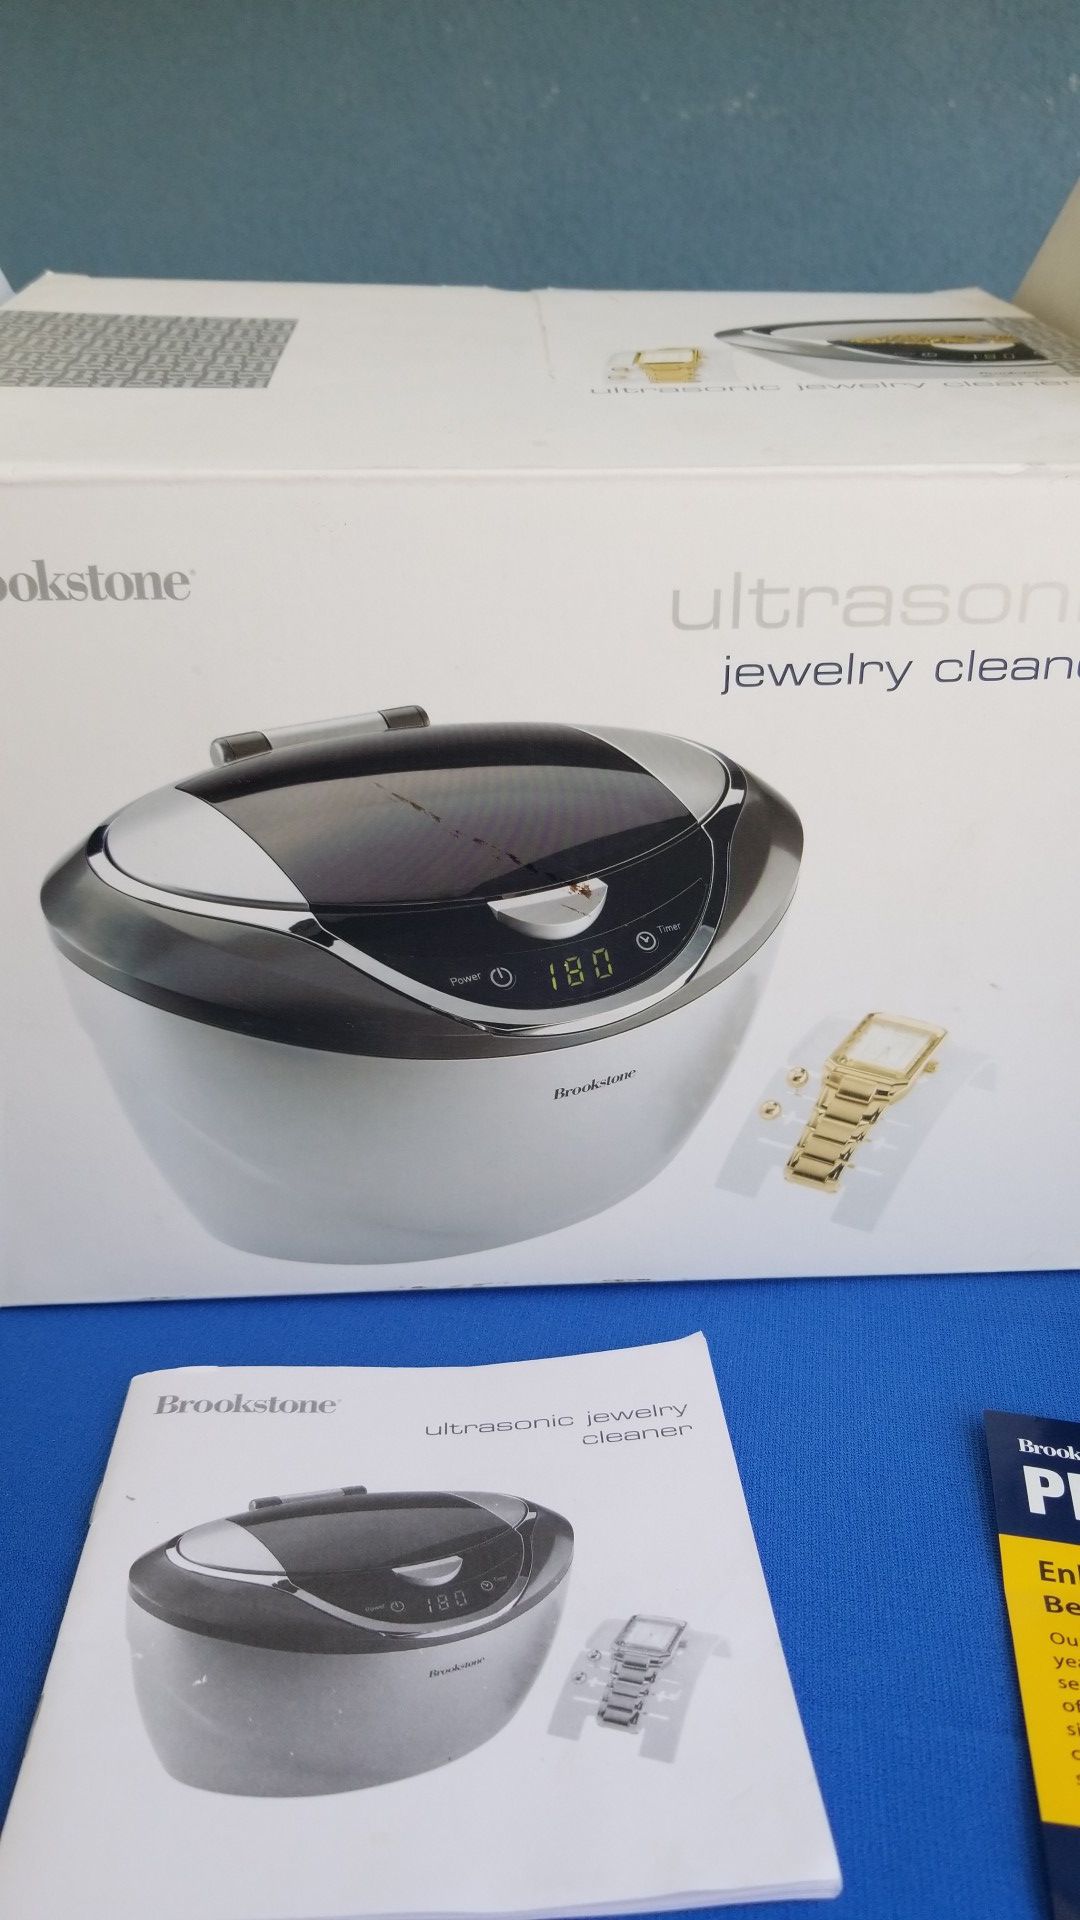 Brookstone ultrasonic jewelry cleaner